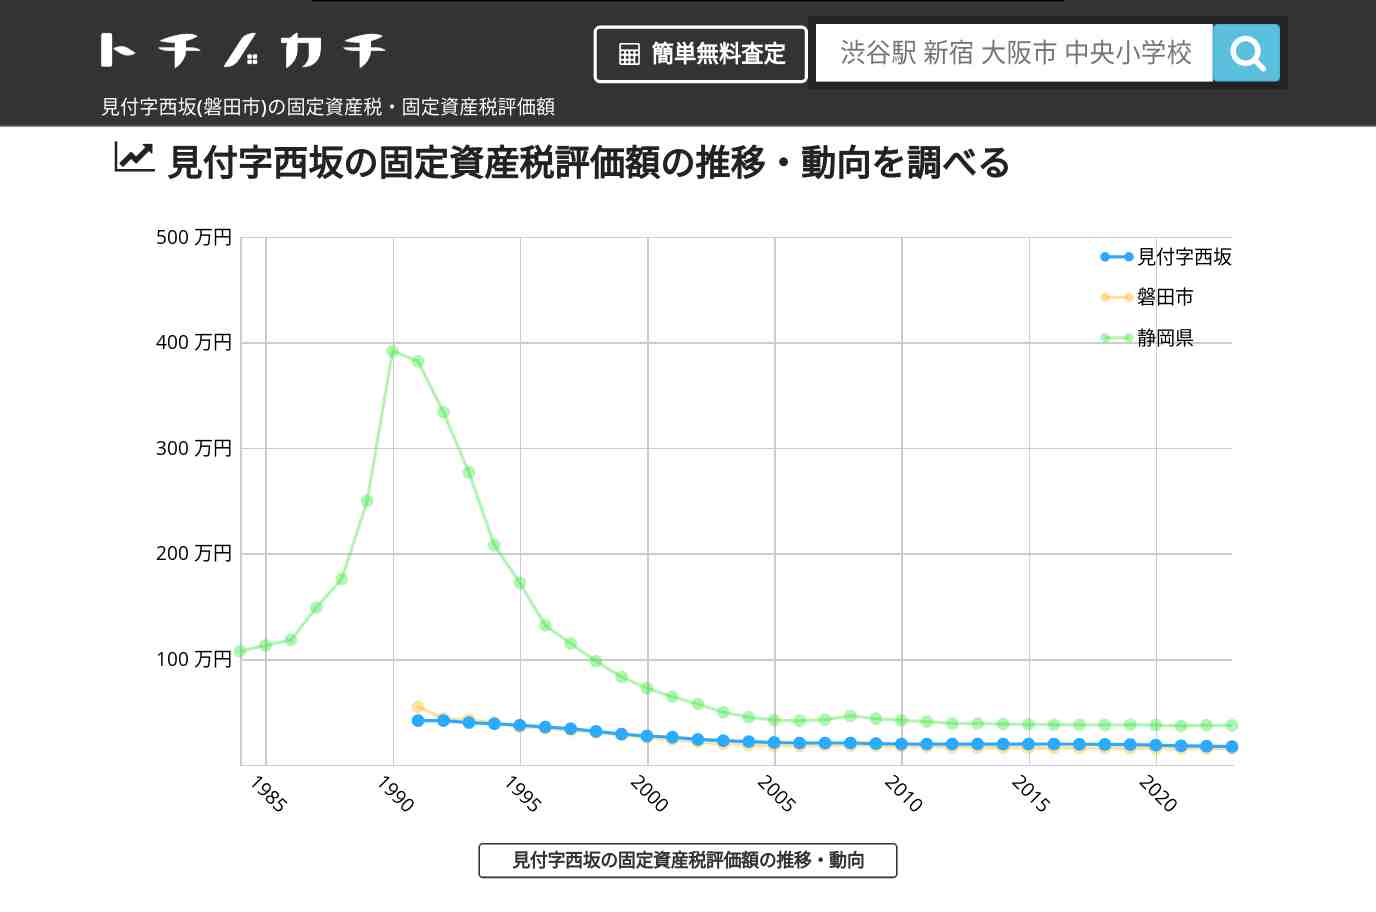 見付字西坂(磐田市)の固定資産税・固定資産税評価額 | トチノカチ